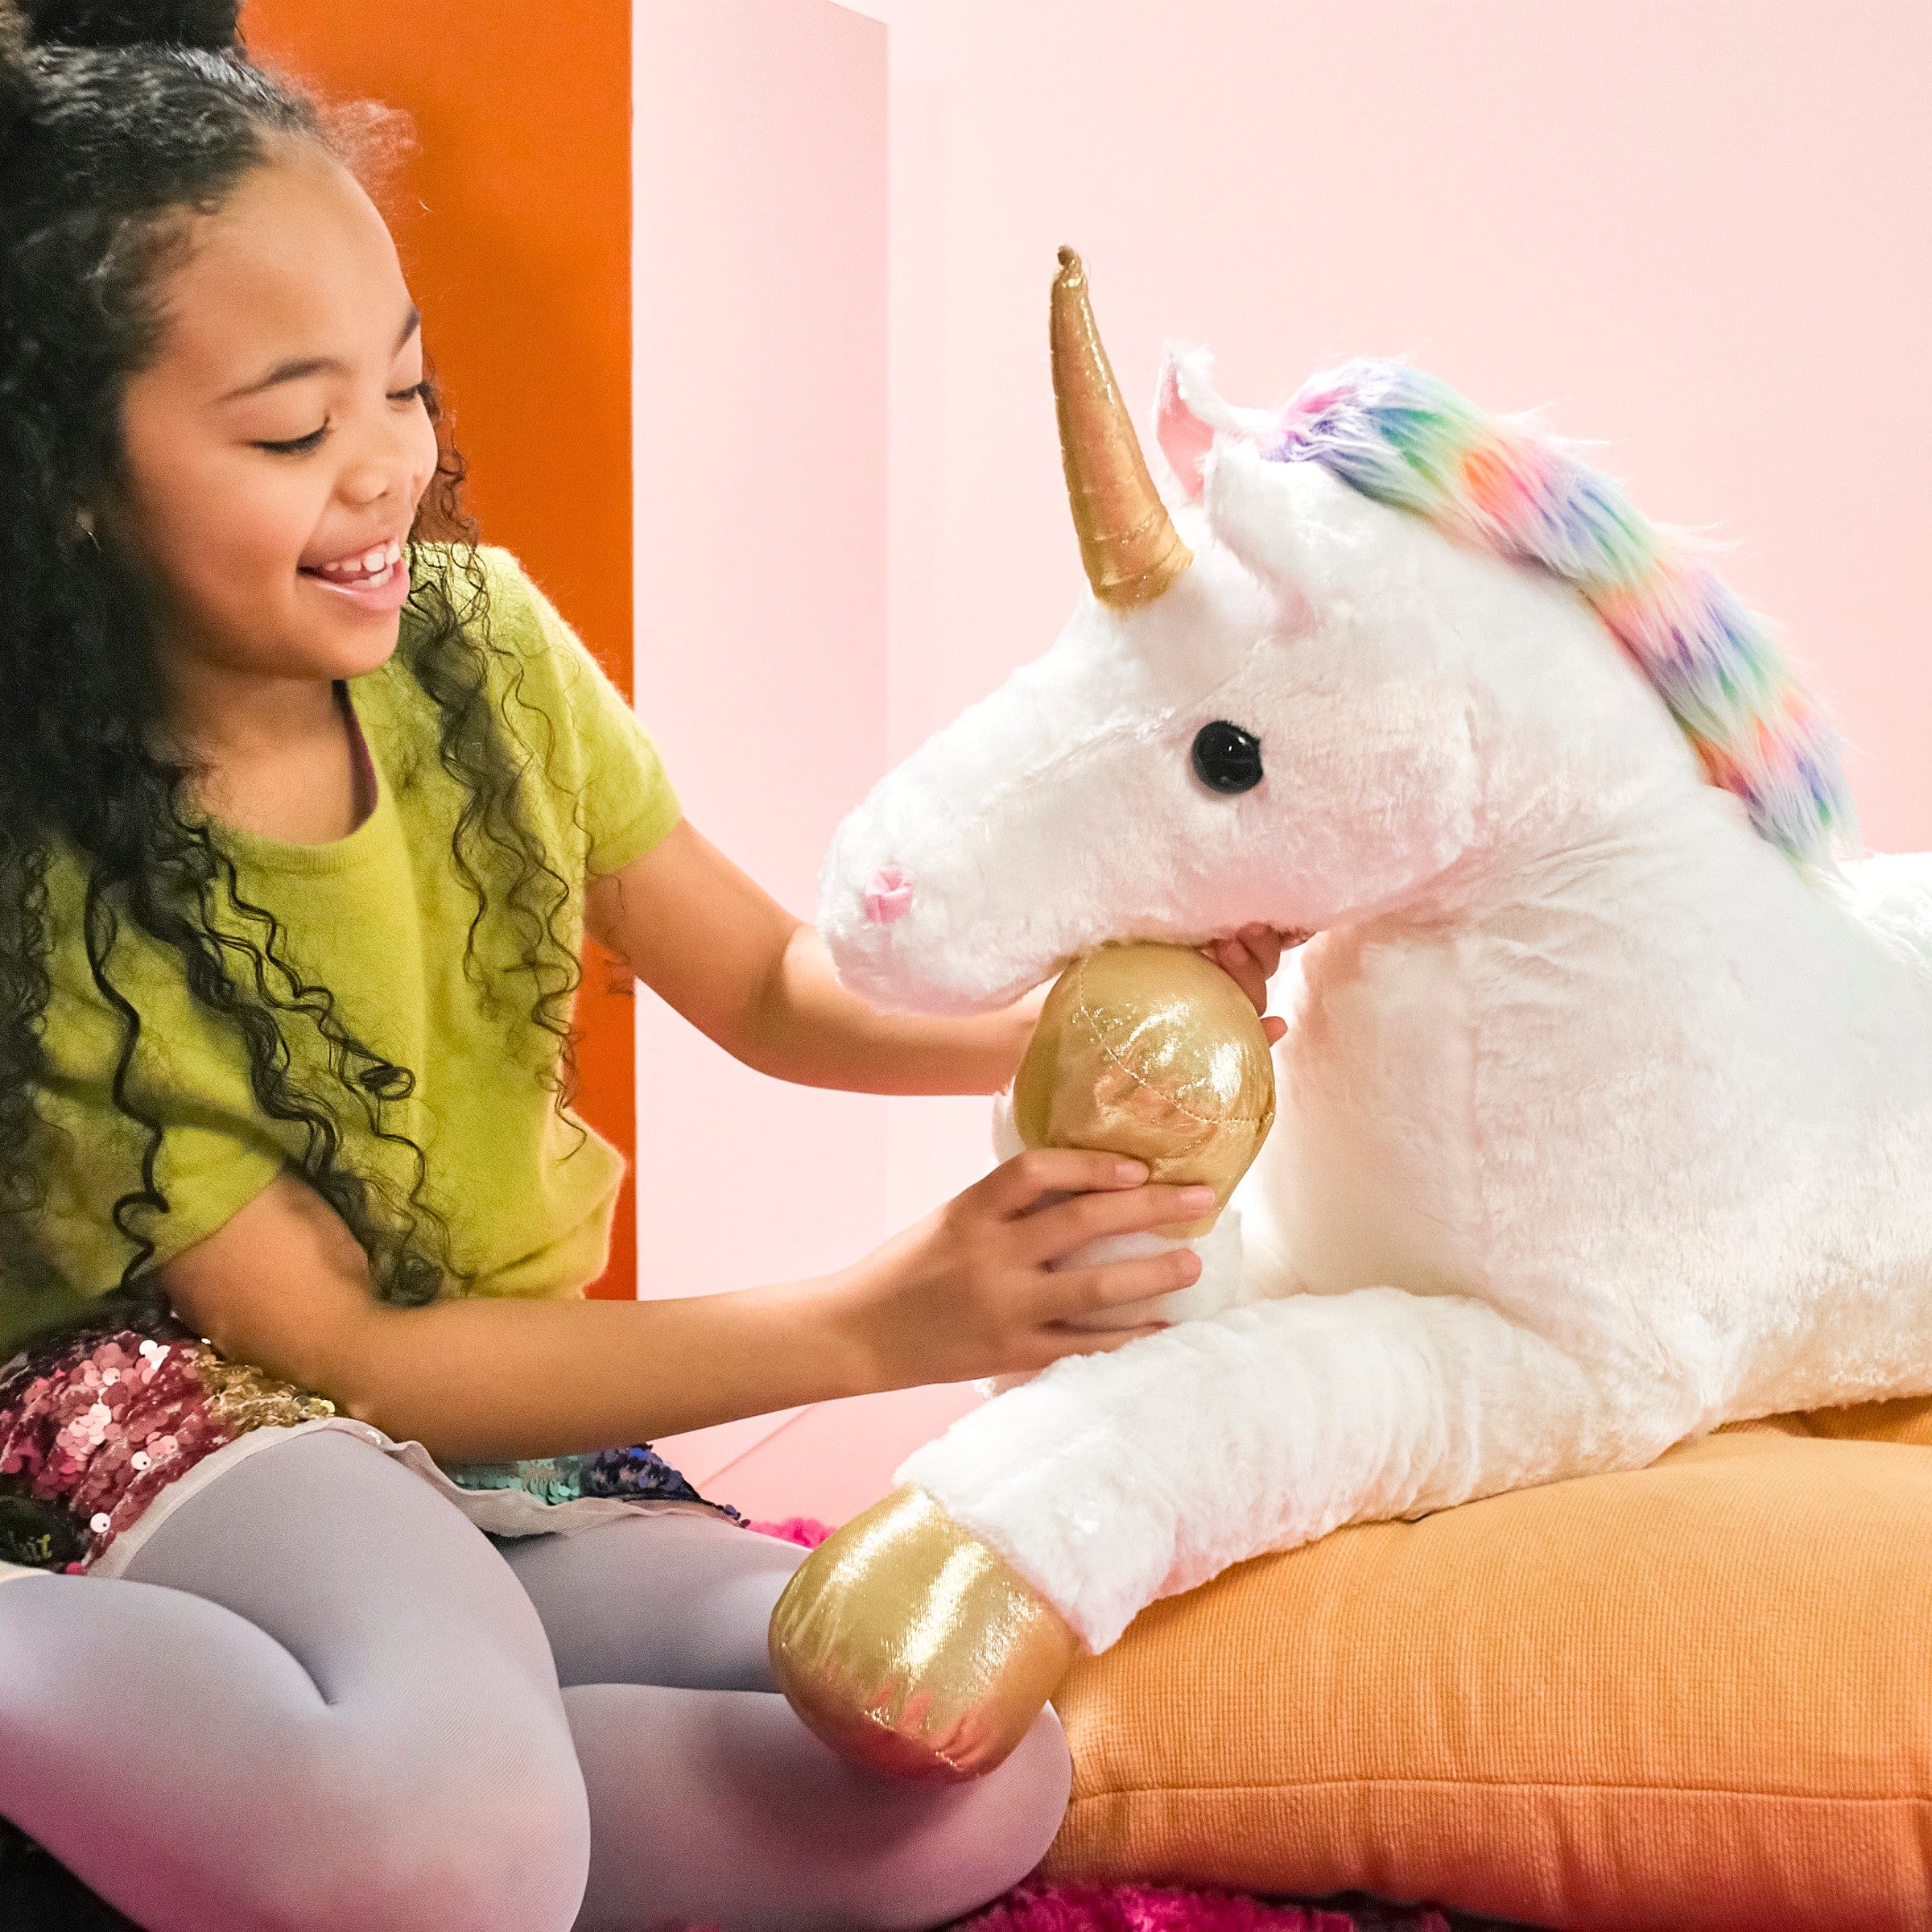 Unicorn Gifts Toys for Girls Age 6 8 Unicorn Birthday Blanket